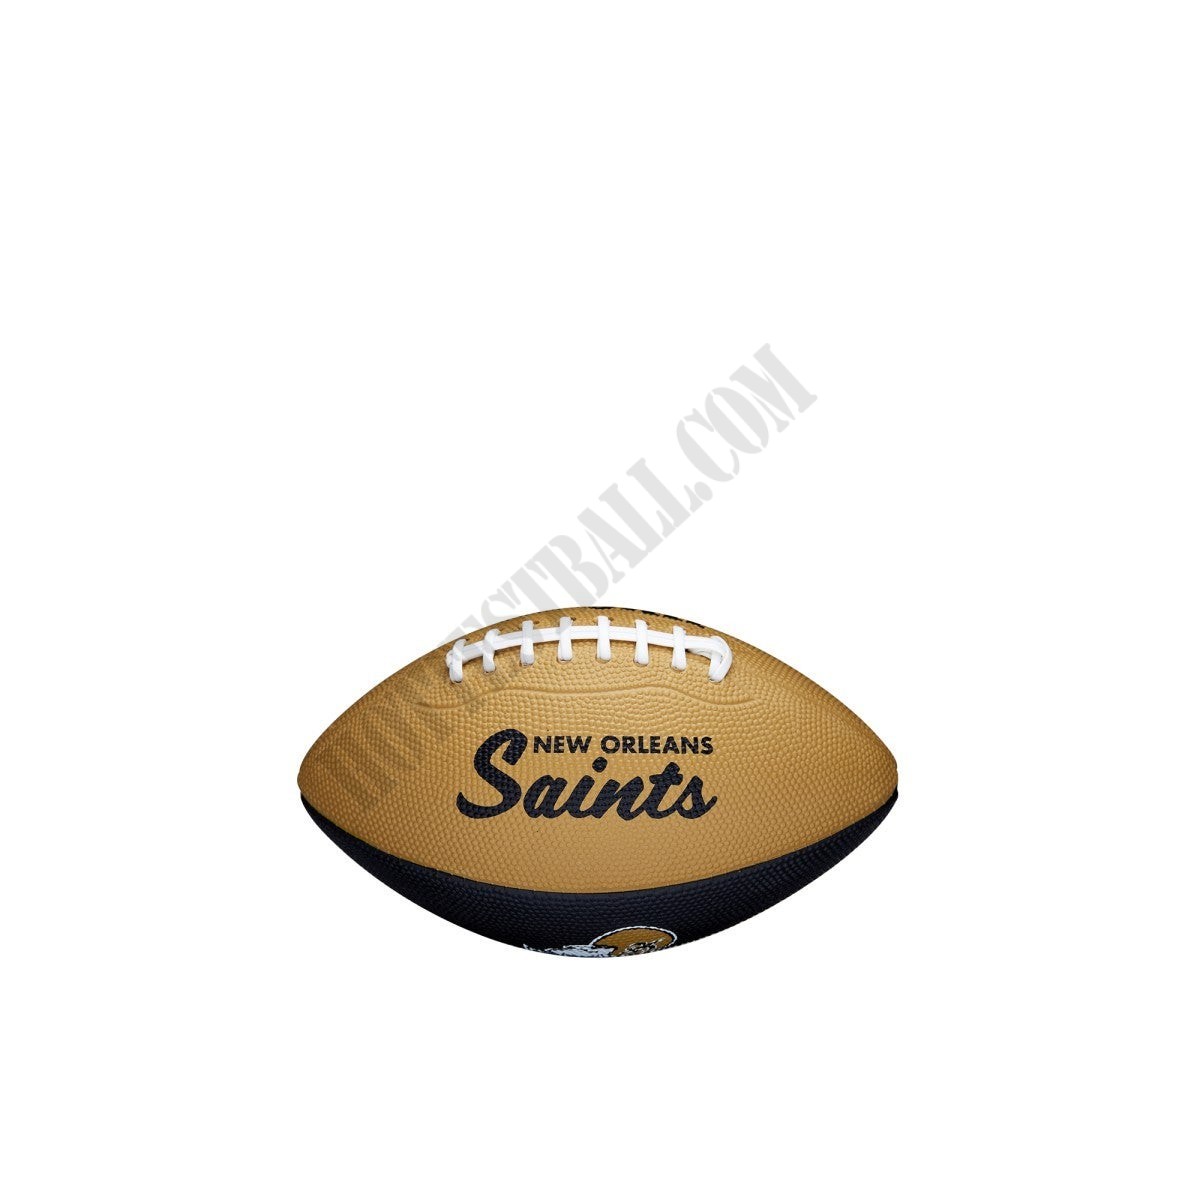 NFL Retro Mini Football - New Orleans Saints ● Wilson Promotions - NFL Retro Mini Football - New Orleans Saints ● Wilson Promotions